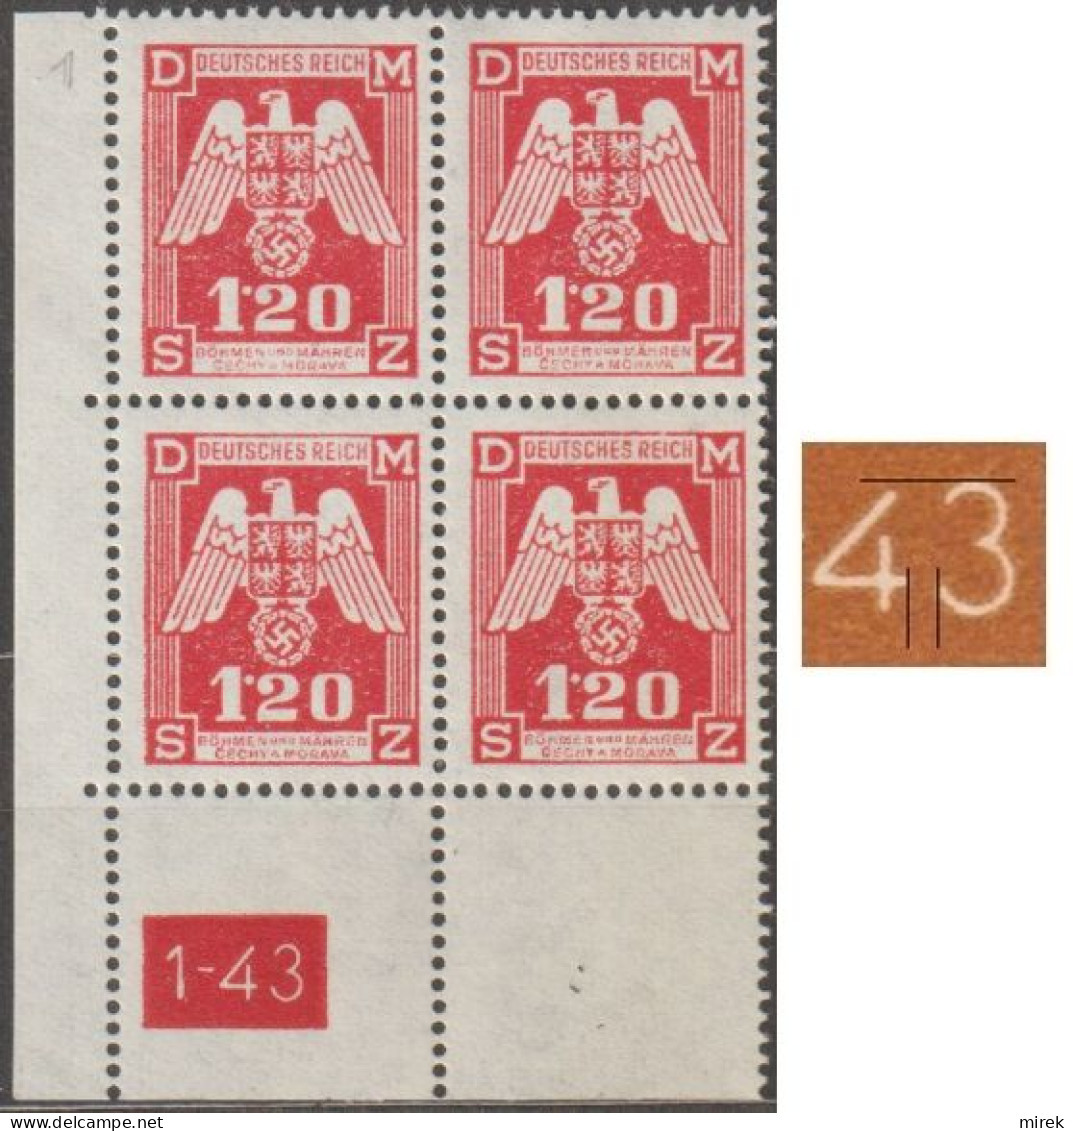 053/ Pof. SL 19, Corner Stamps, Plate Number 1-43, Type 2, Var. 1 - Neufs